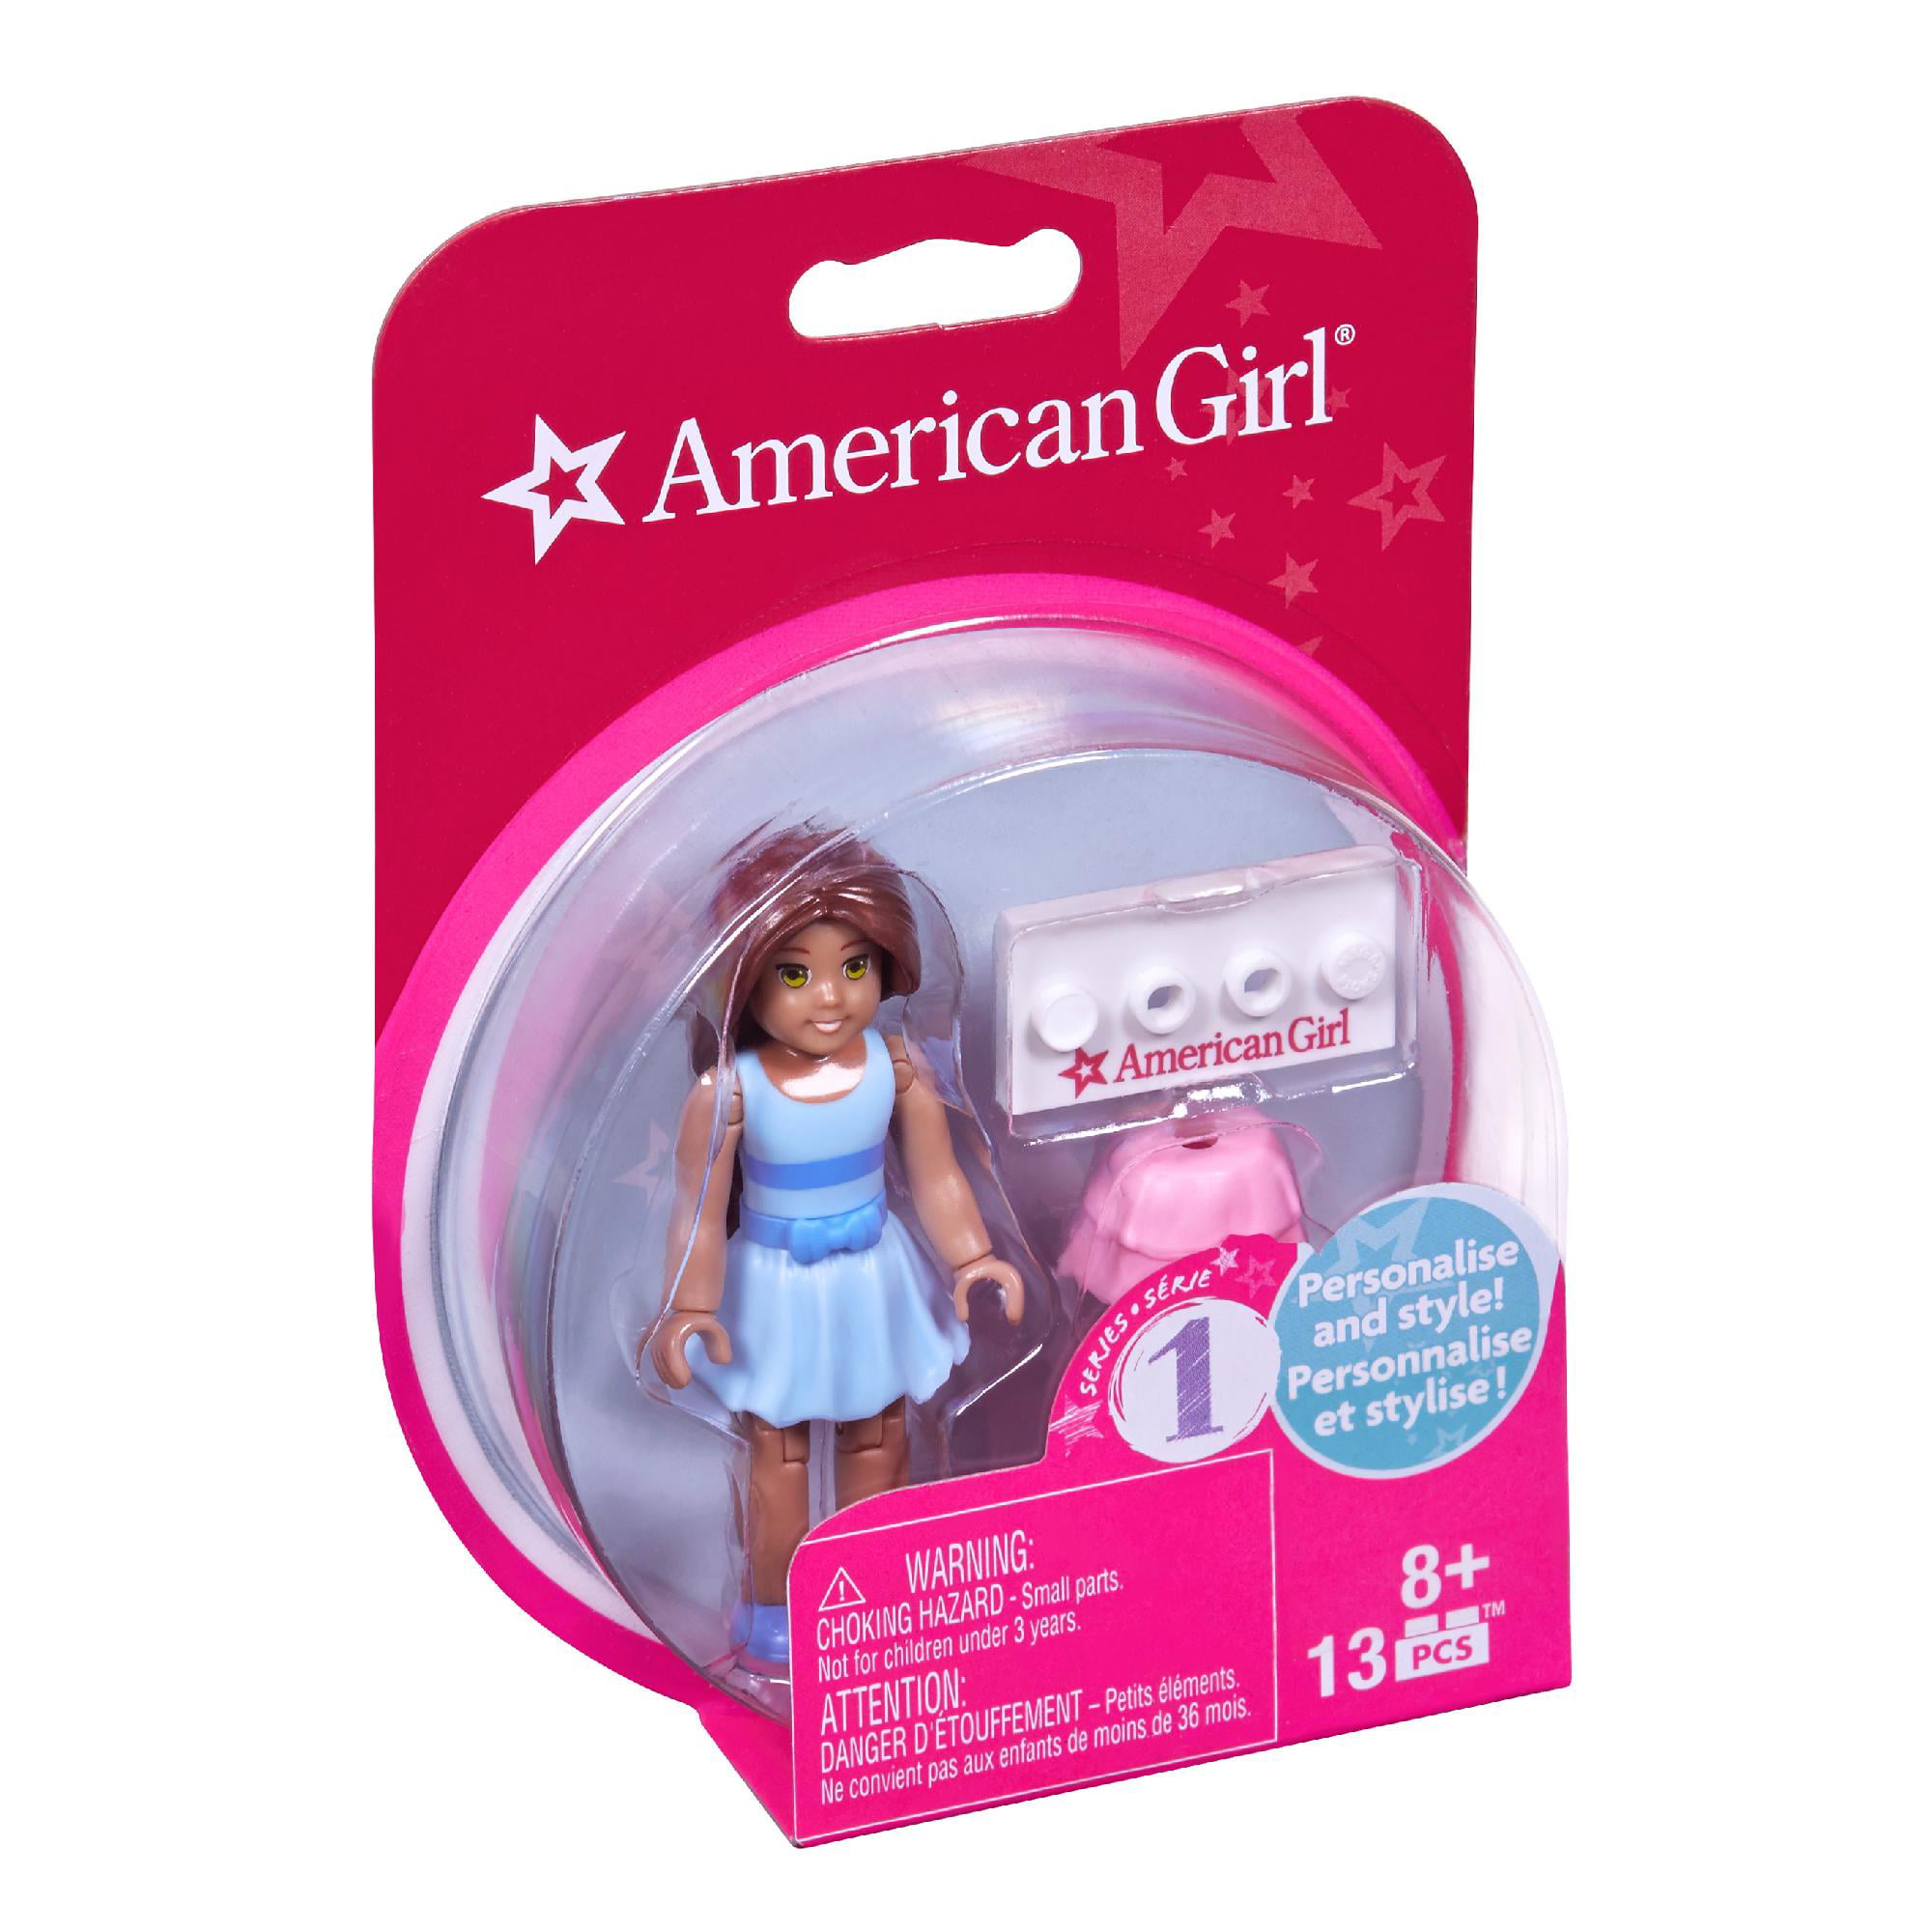 American Girl Mega Bloks Series 1 DRC73 Figure 2015 Mattel for sale online 